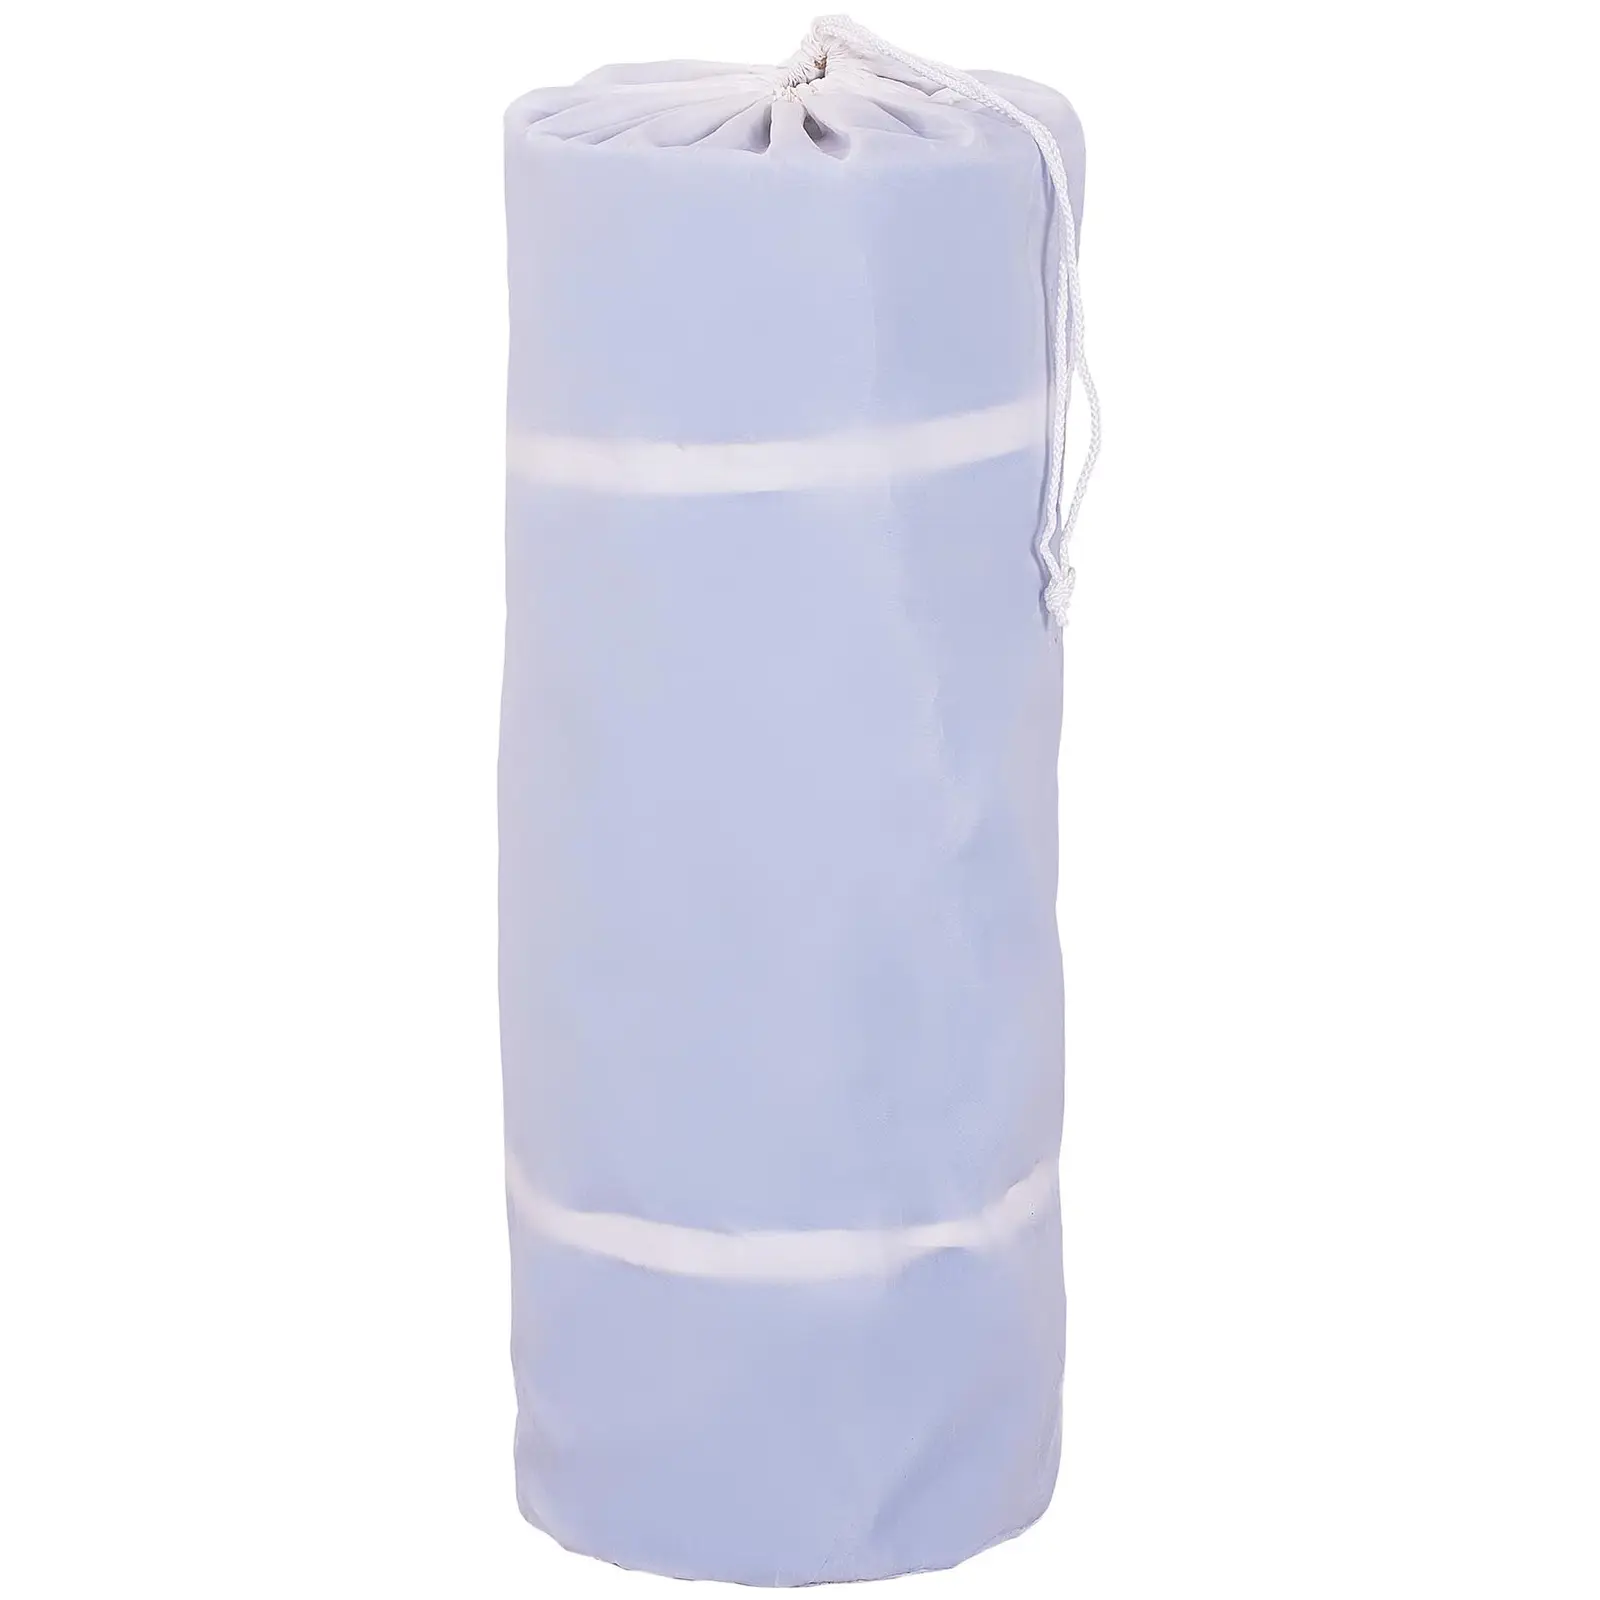 Uppblåsbar gymnastikmatta - 500 x 100 x 20 cm - blå och vit